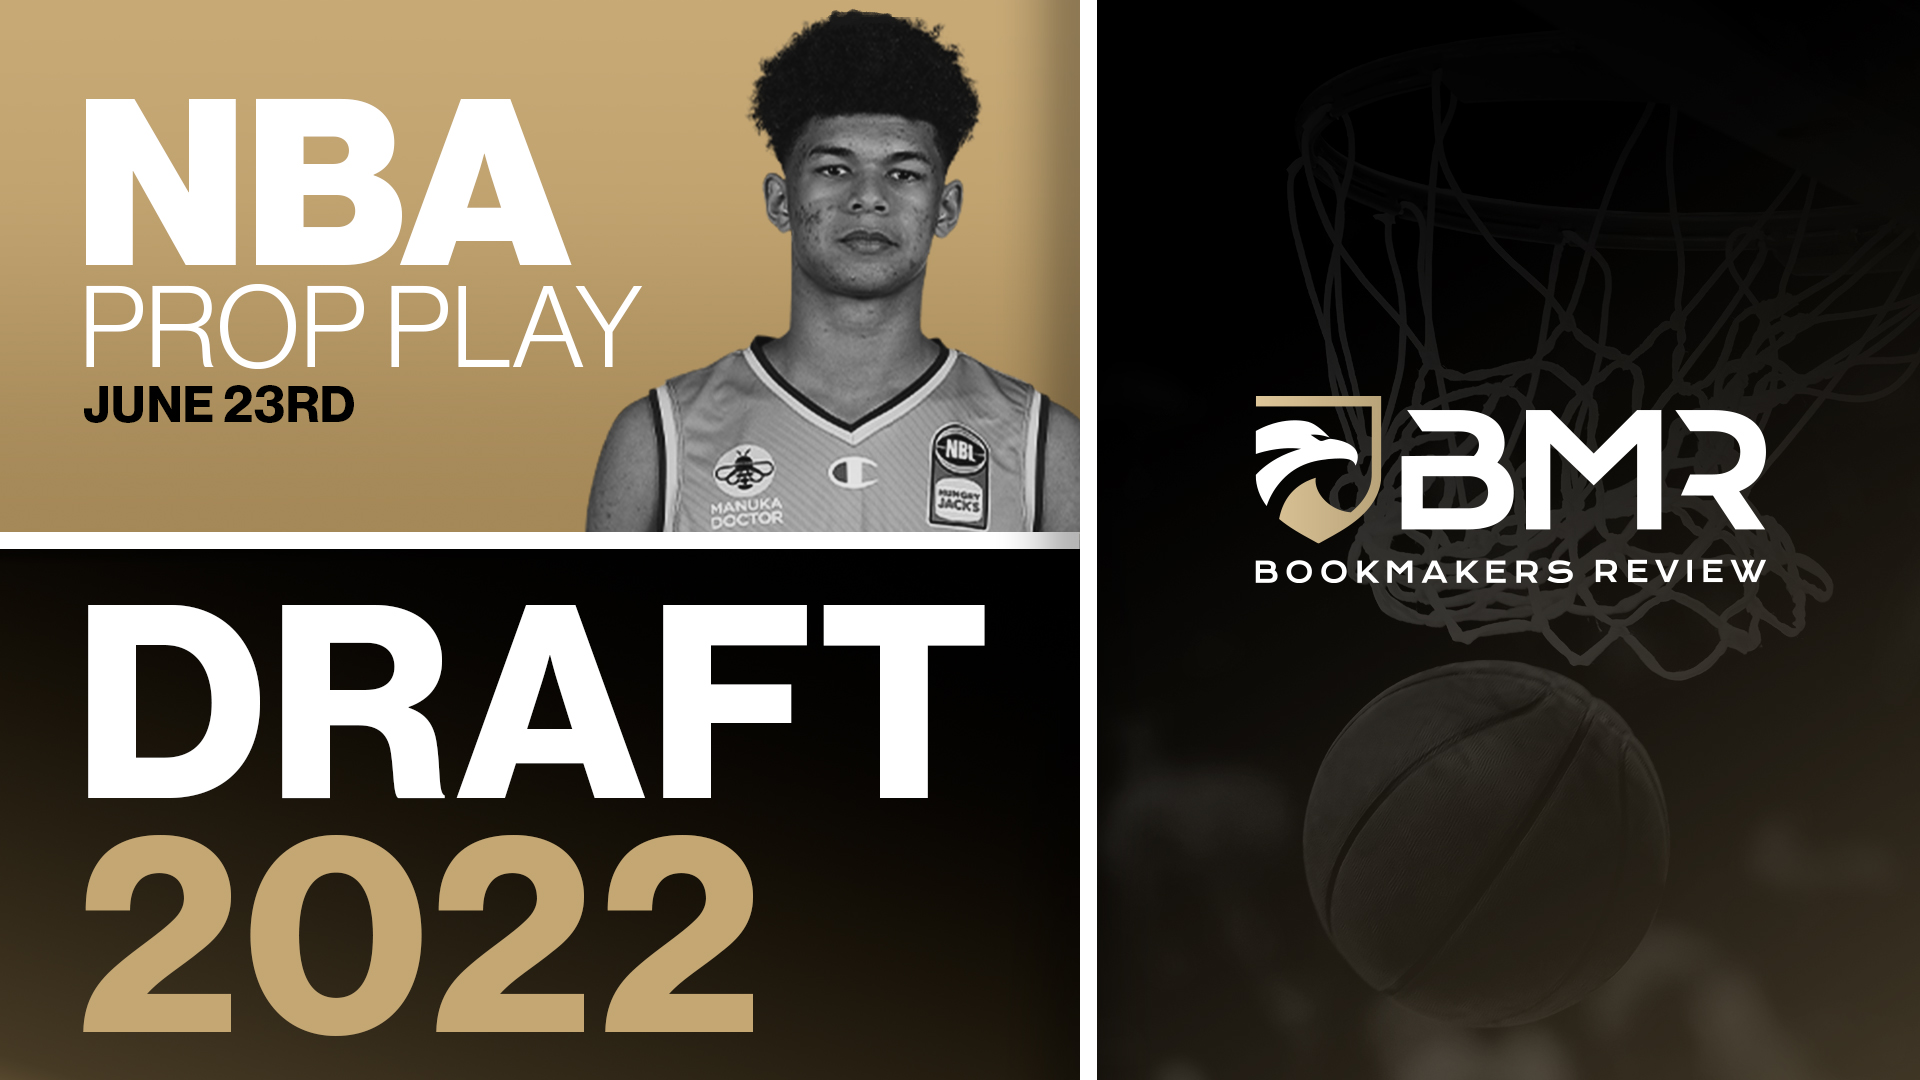 NBA Draft 2022 | Free NBA Draft Player Prop Pick on Ousmane Dieng by Jordan Sharp &#8211; June 23rd